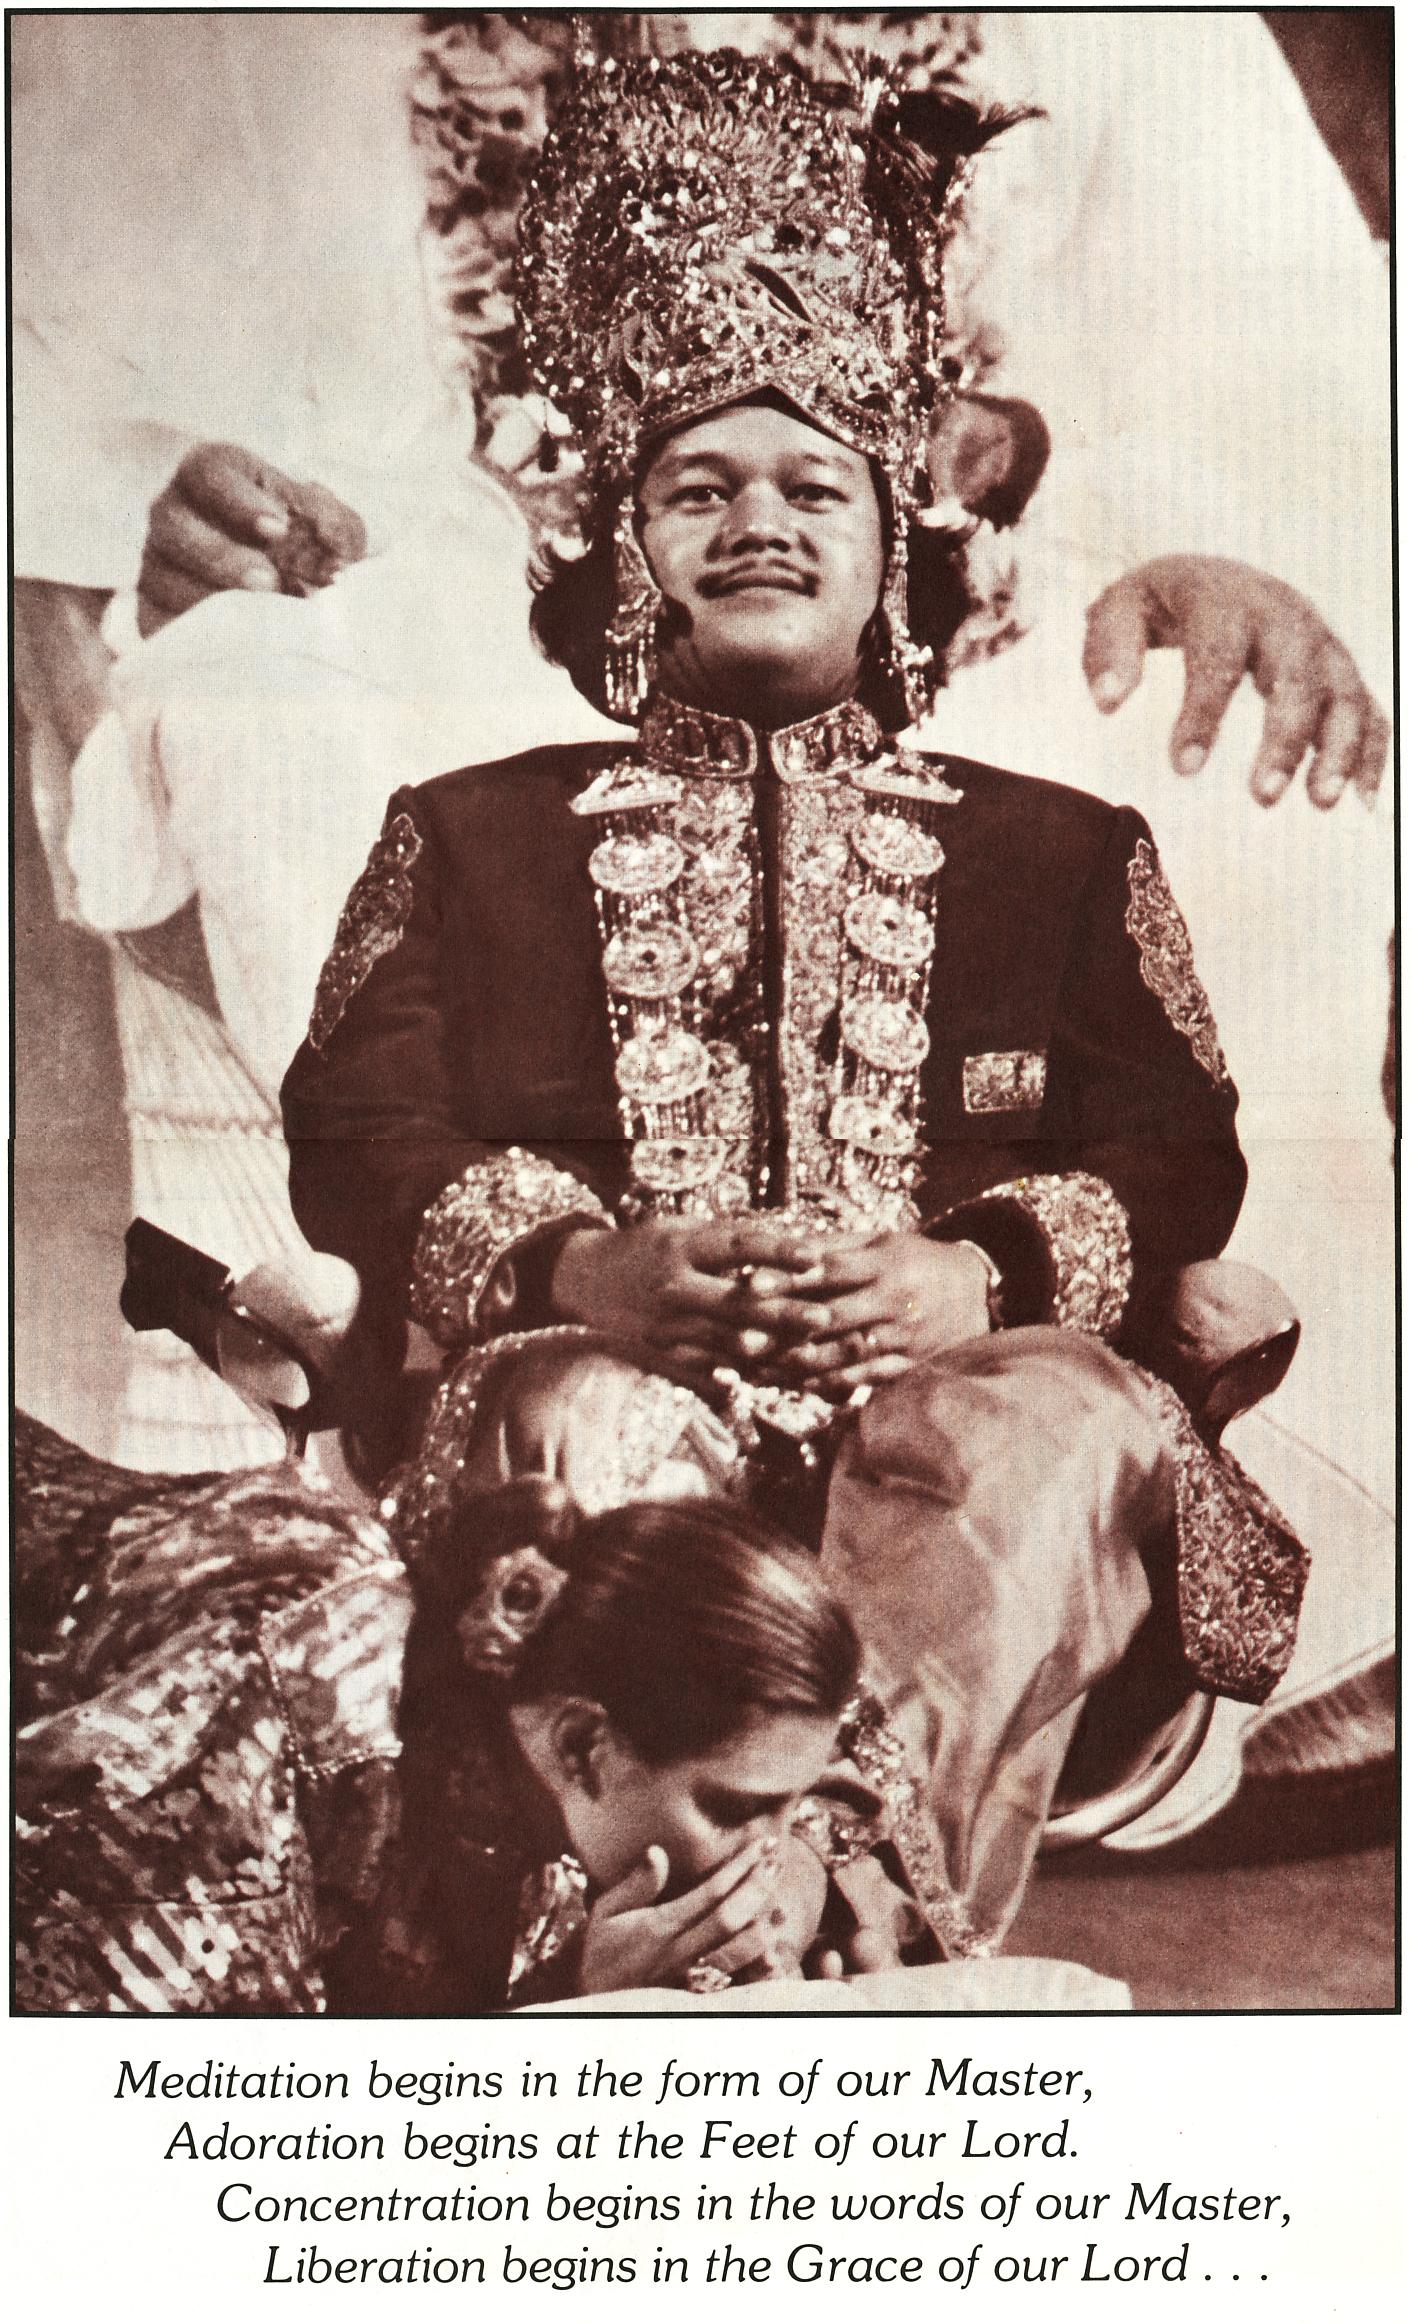 Prem Rawat (Maharaji) Is Dressed as Krishna While HIs Wife Kisses His Feet